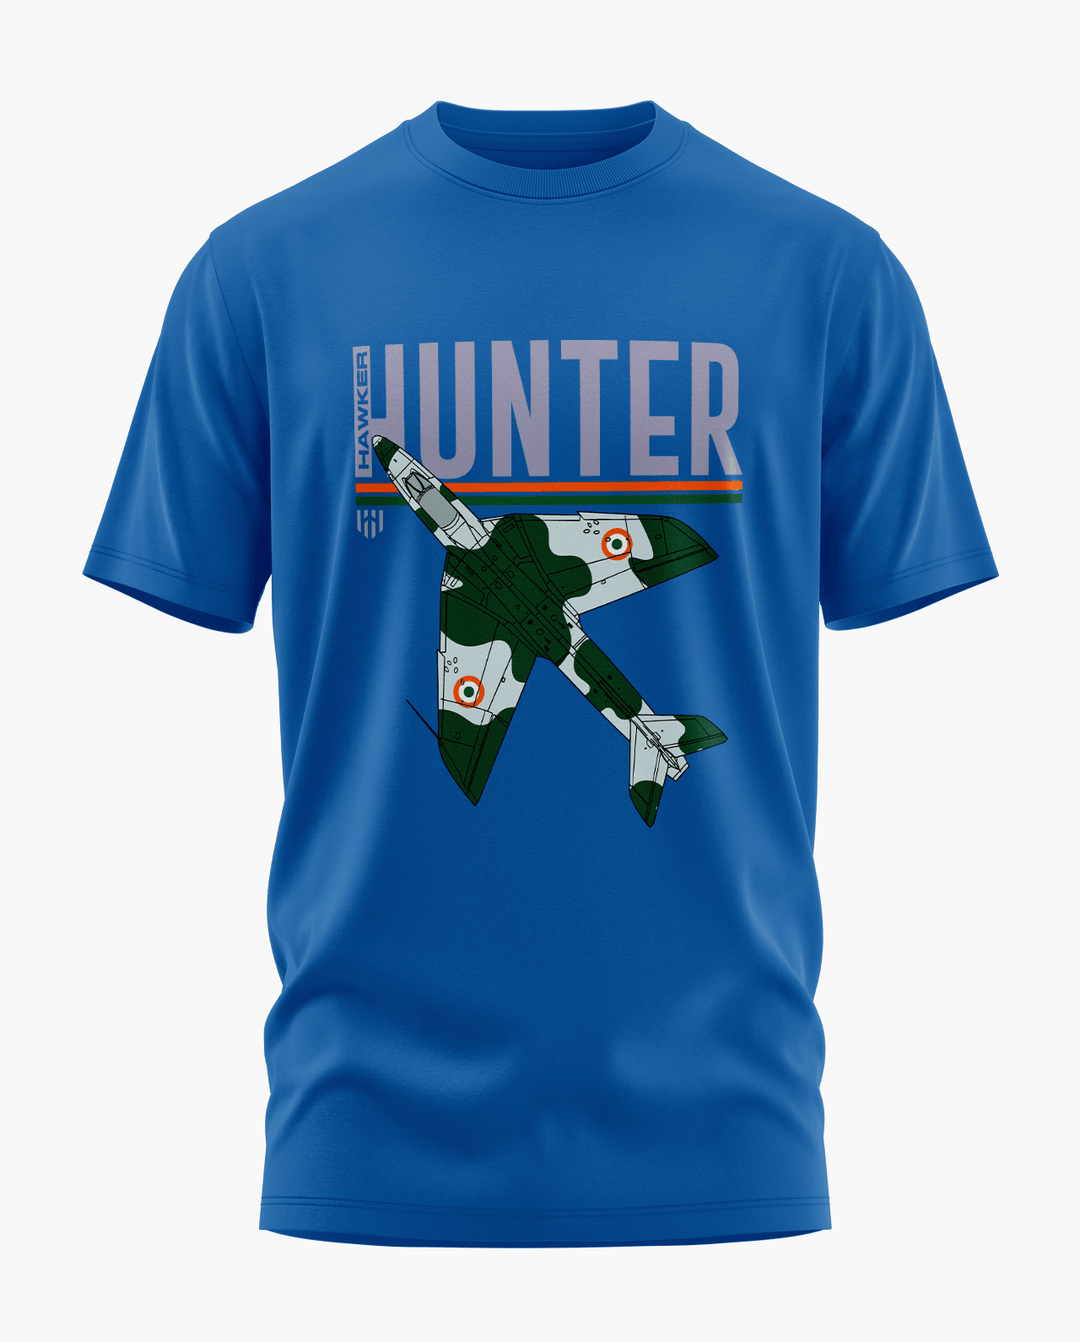 Hunter T-Shirt - Aero Armour